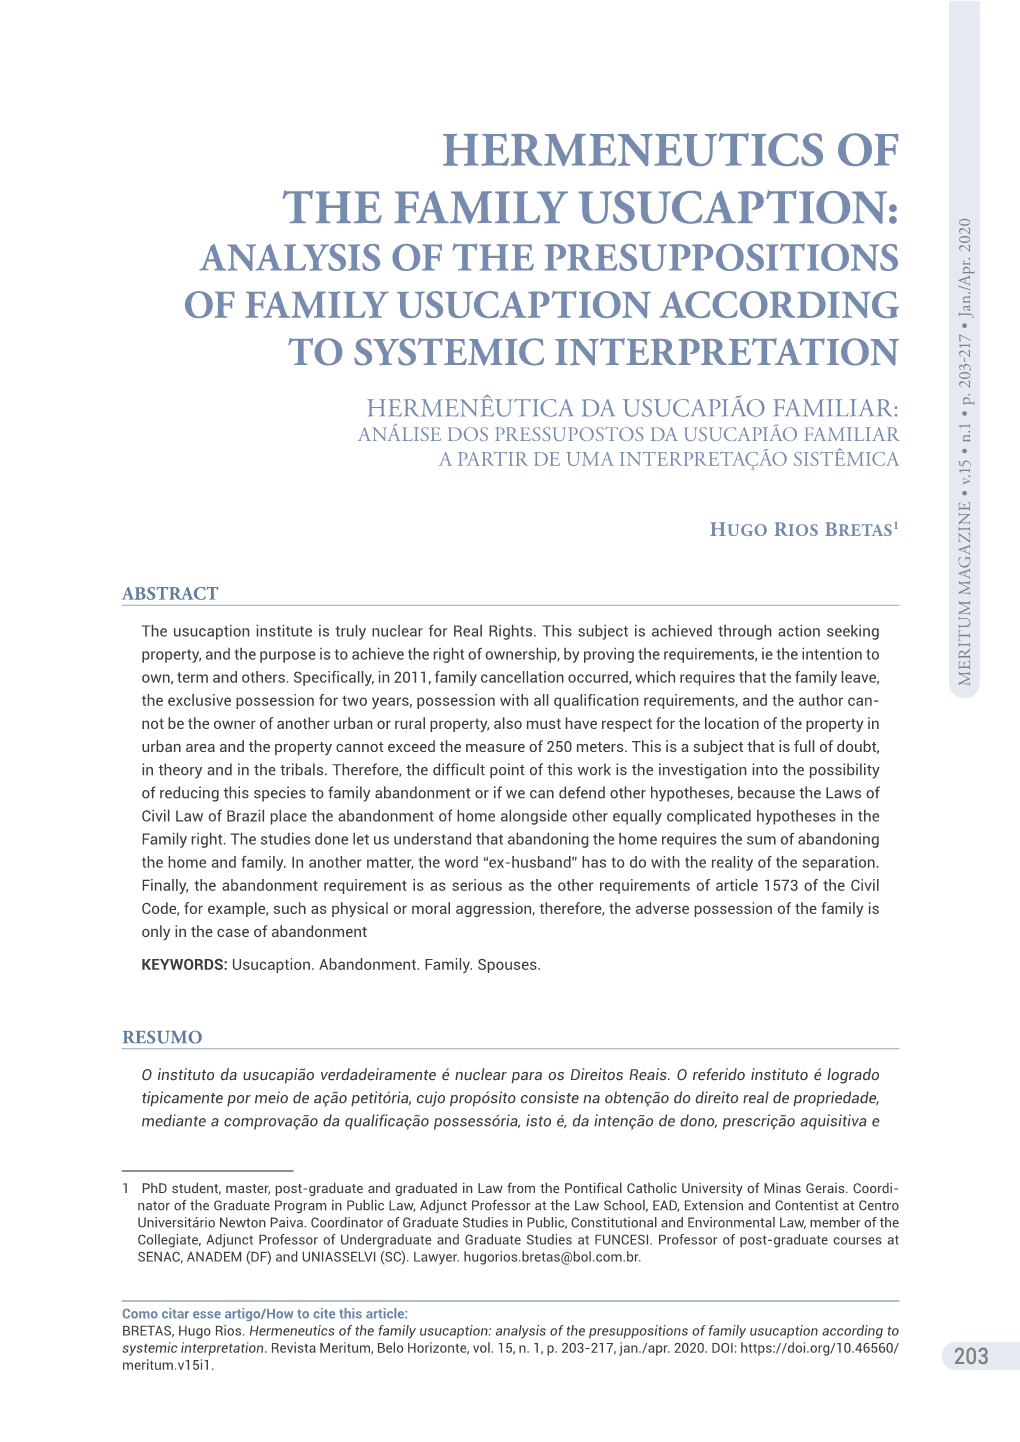 Hermeneutics of the Family Usucaption: Analysis of the Presuppositions of Family Usucaption According to Systemic Interpretation